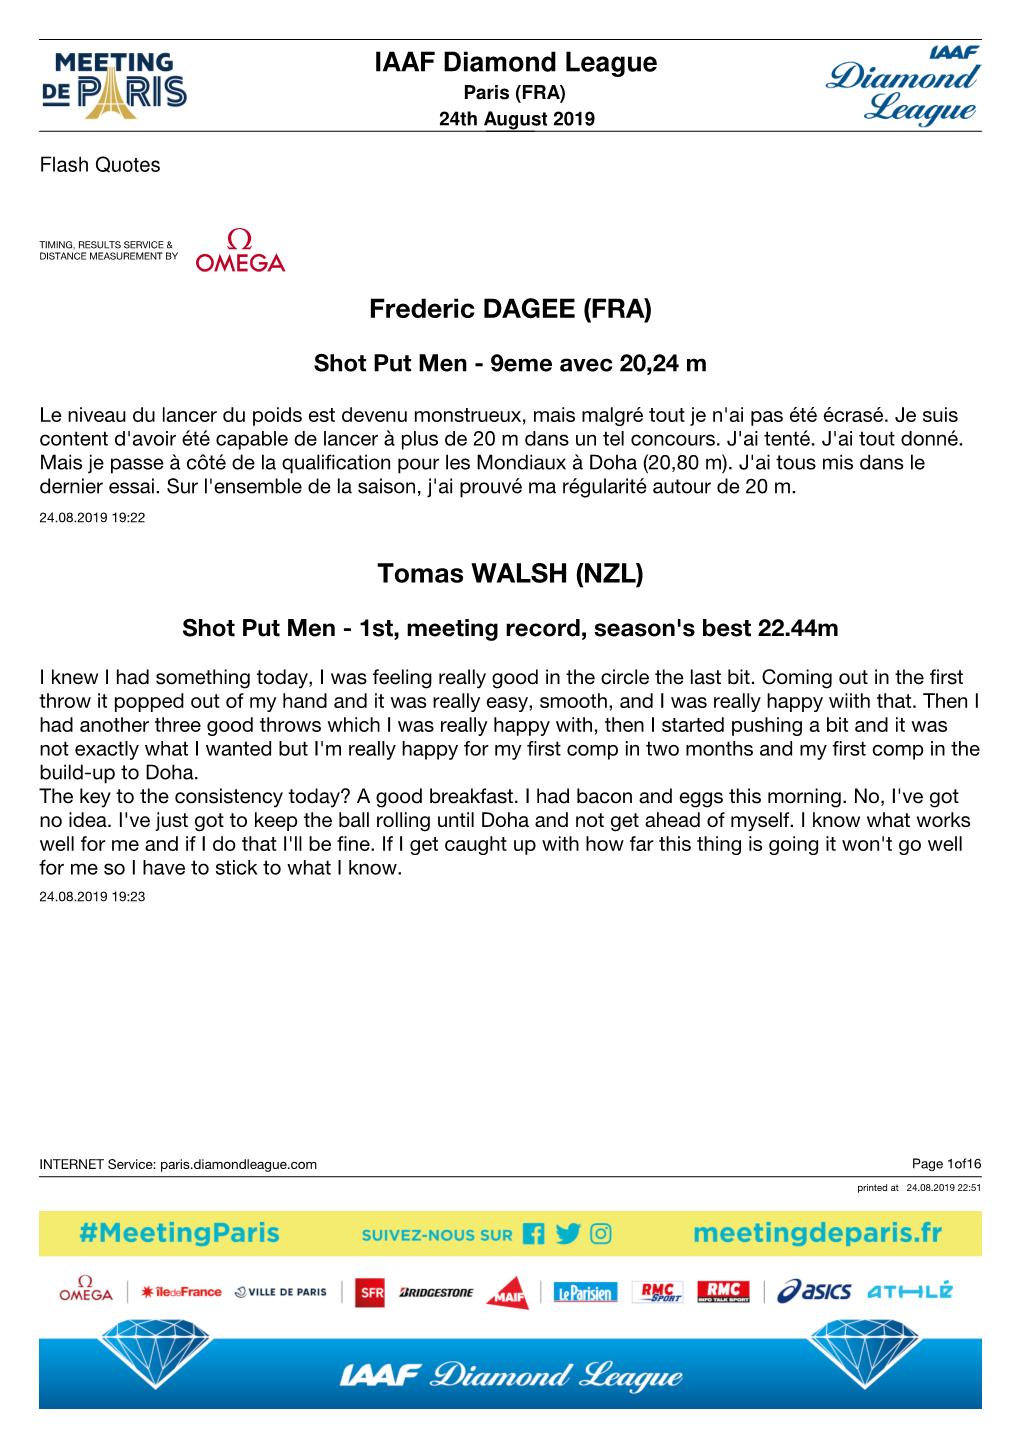 IAAF Diamond League Frederic DAGEE (FRA) Tomas WALSH (NZL)